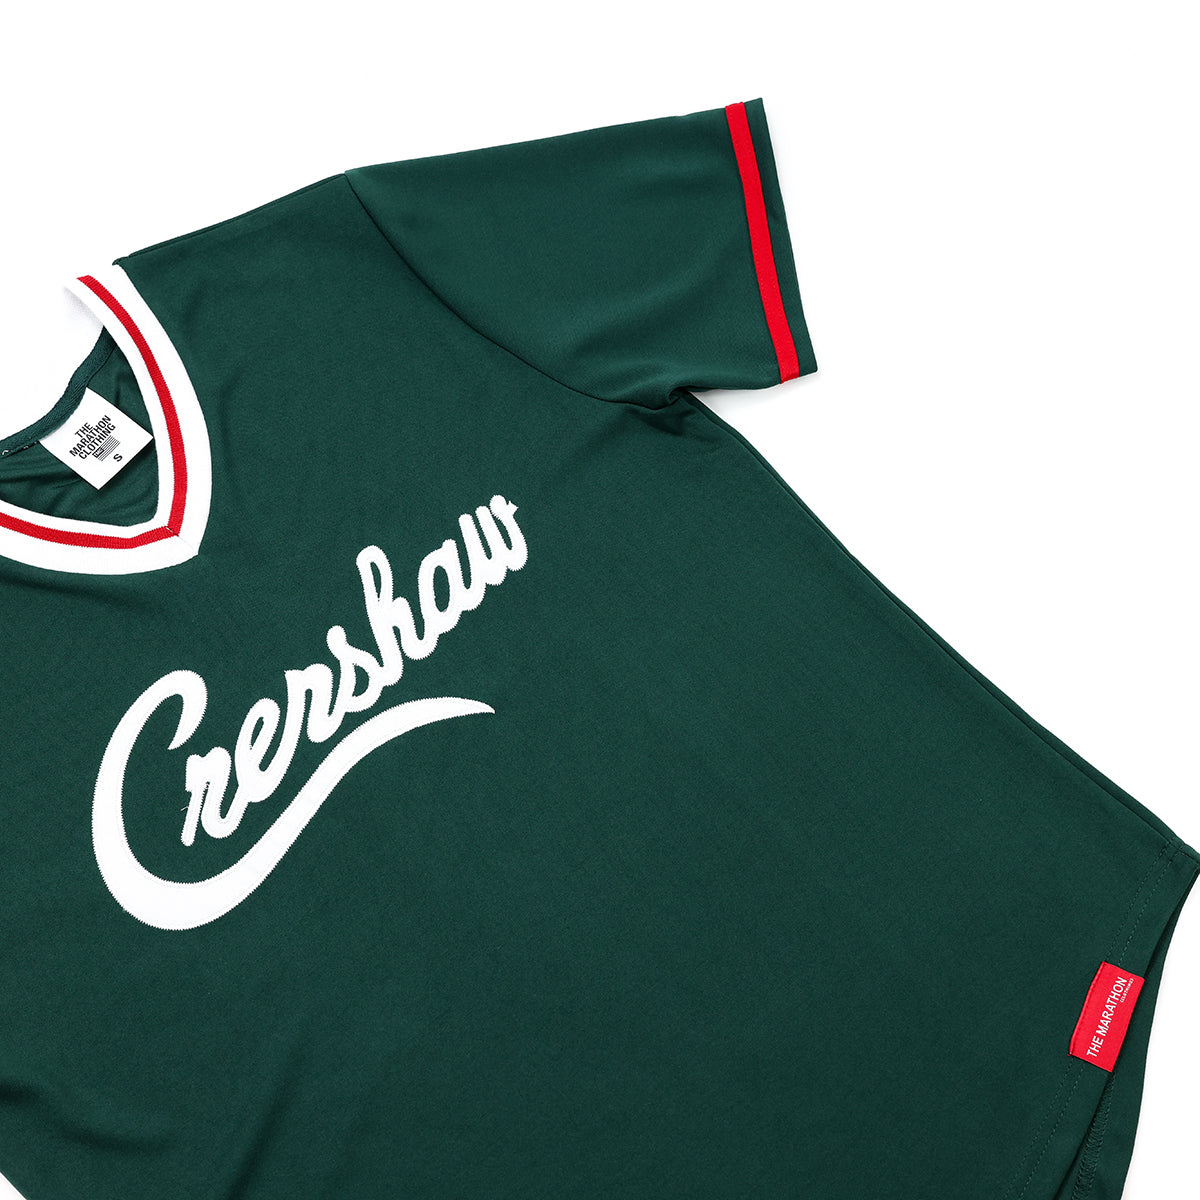 Crenshaw Baseball Warm Up - Green/Red - Back